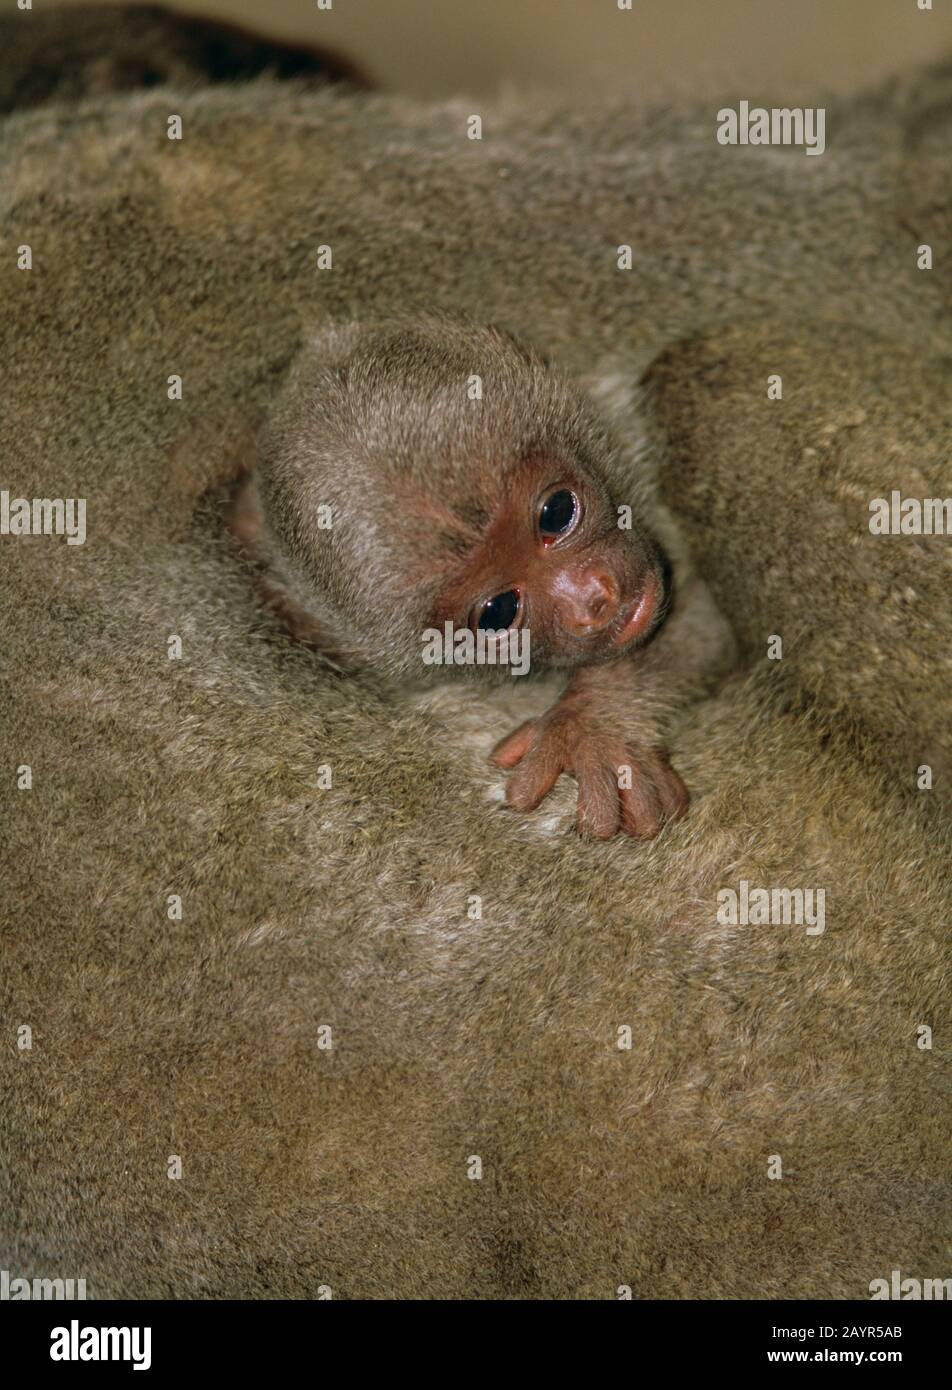 Mono de lana común, mono de lana de Humboldt, mono de lana marrón (Lagothrix lagotricha), mono bebé balbuceador, retrato Foto de stock